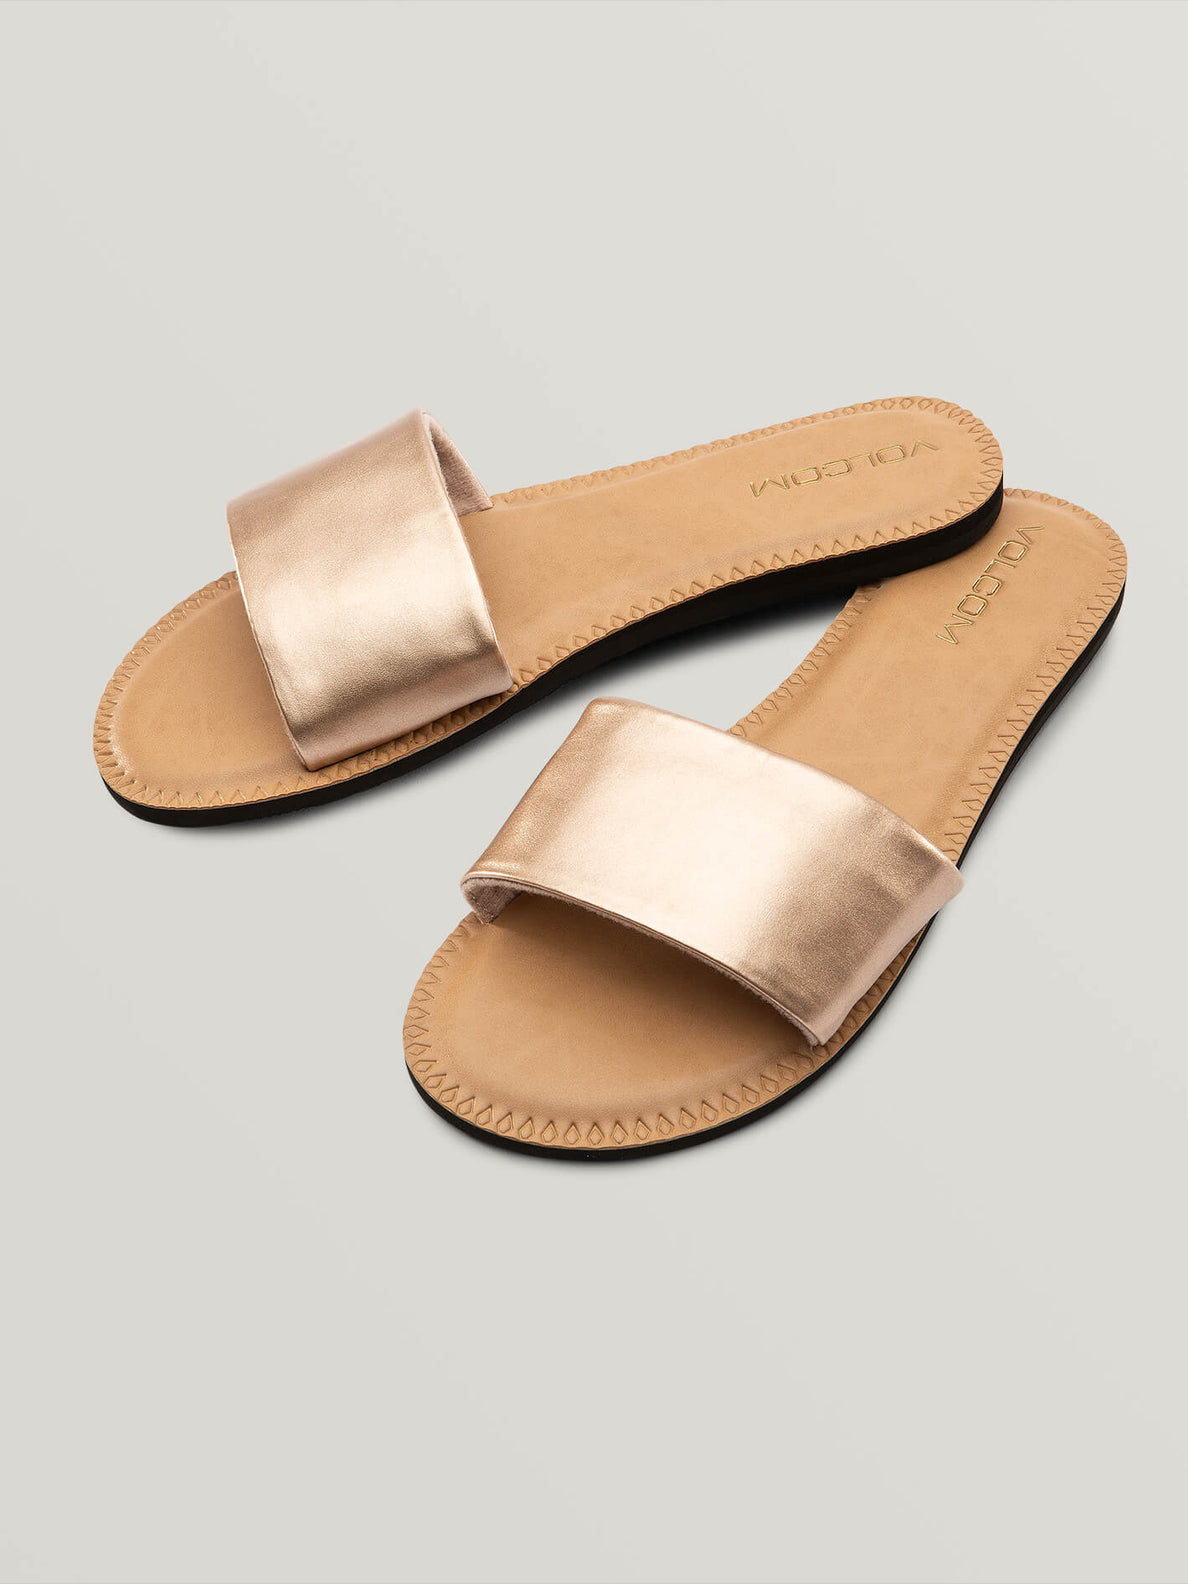 simple gold sandals